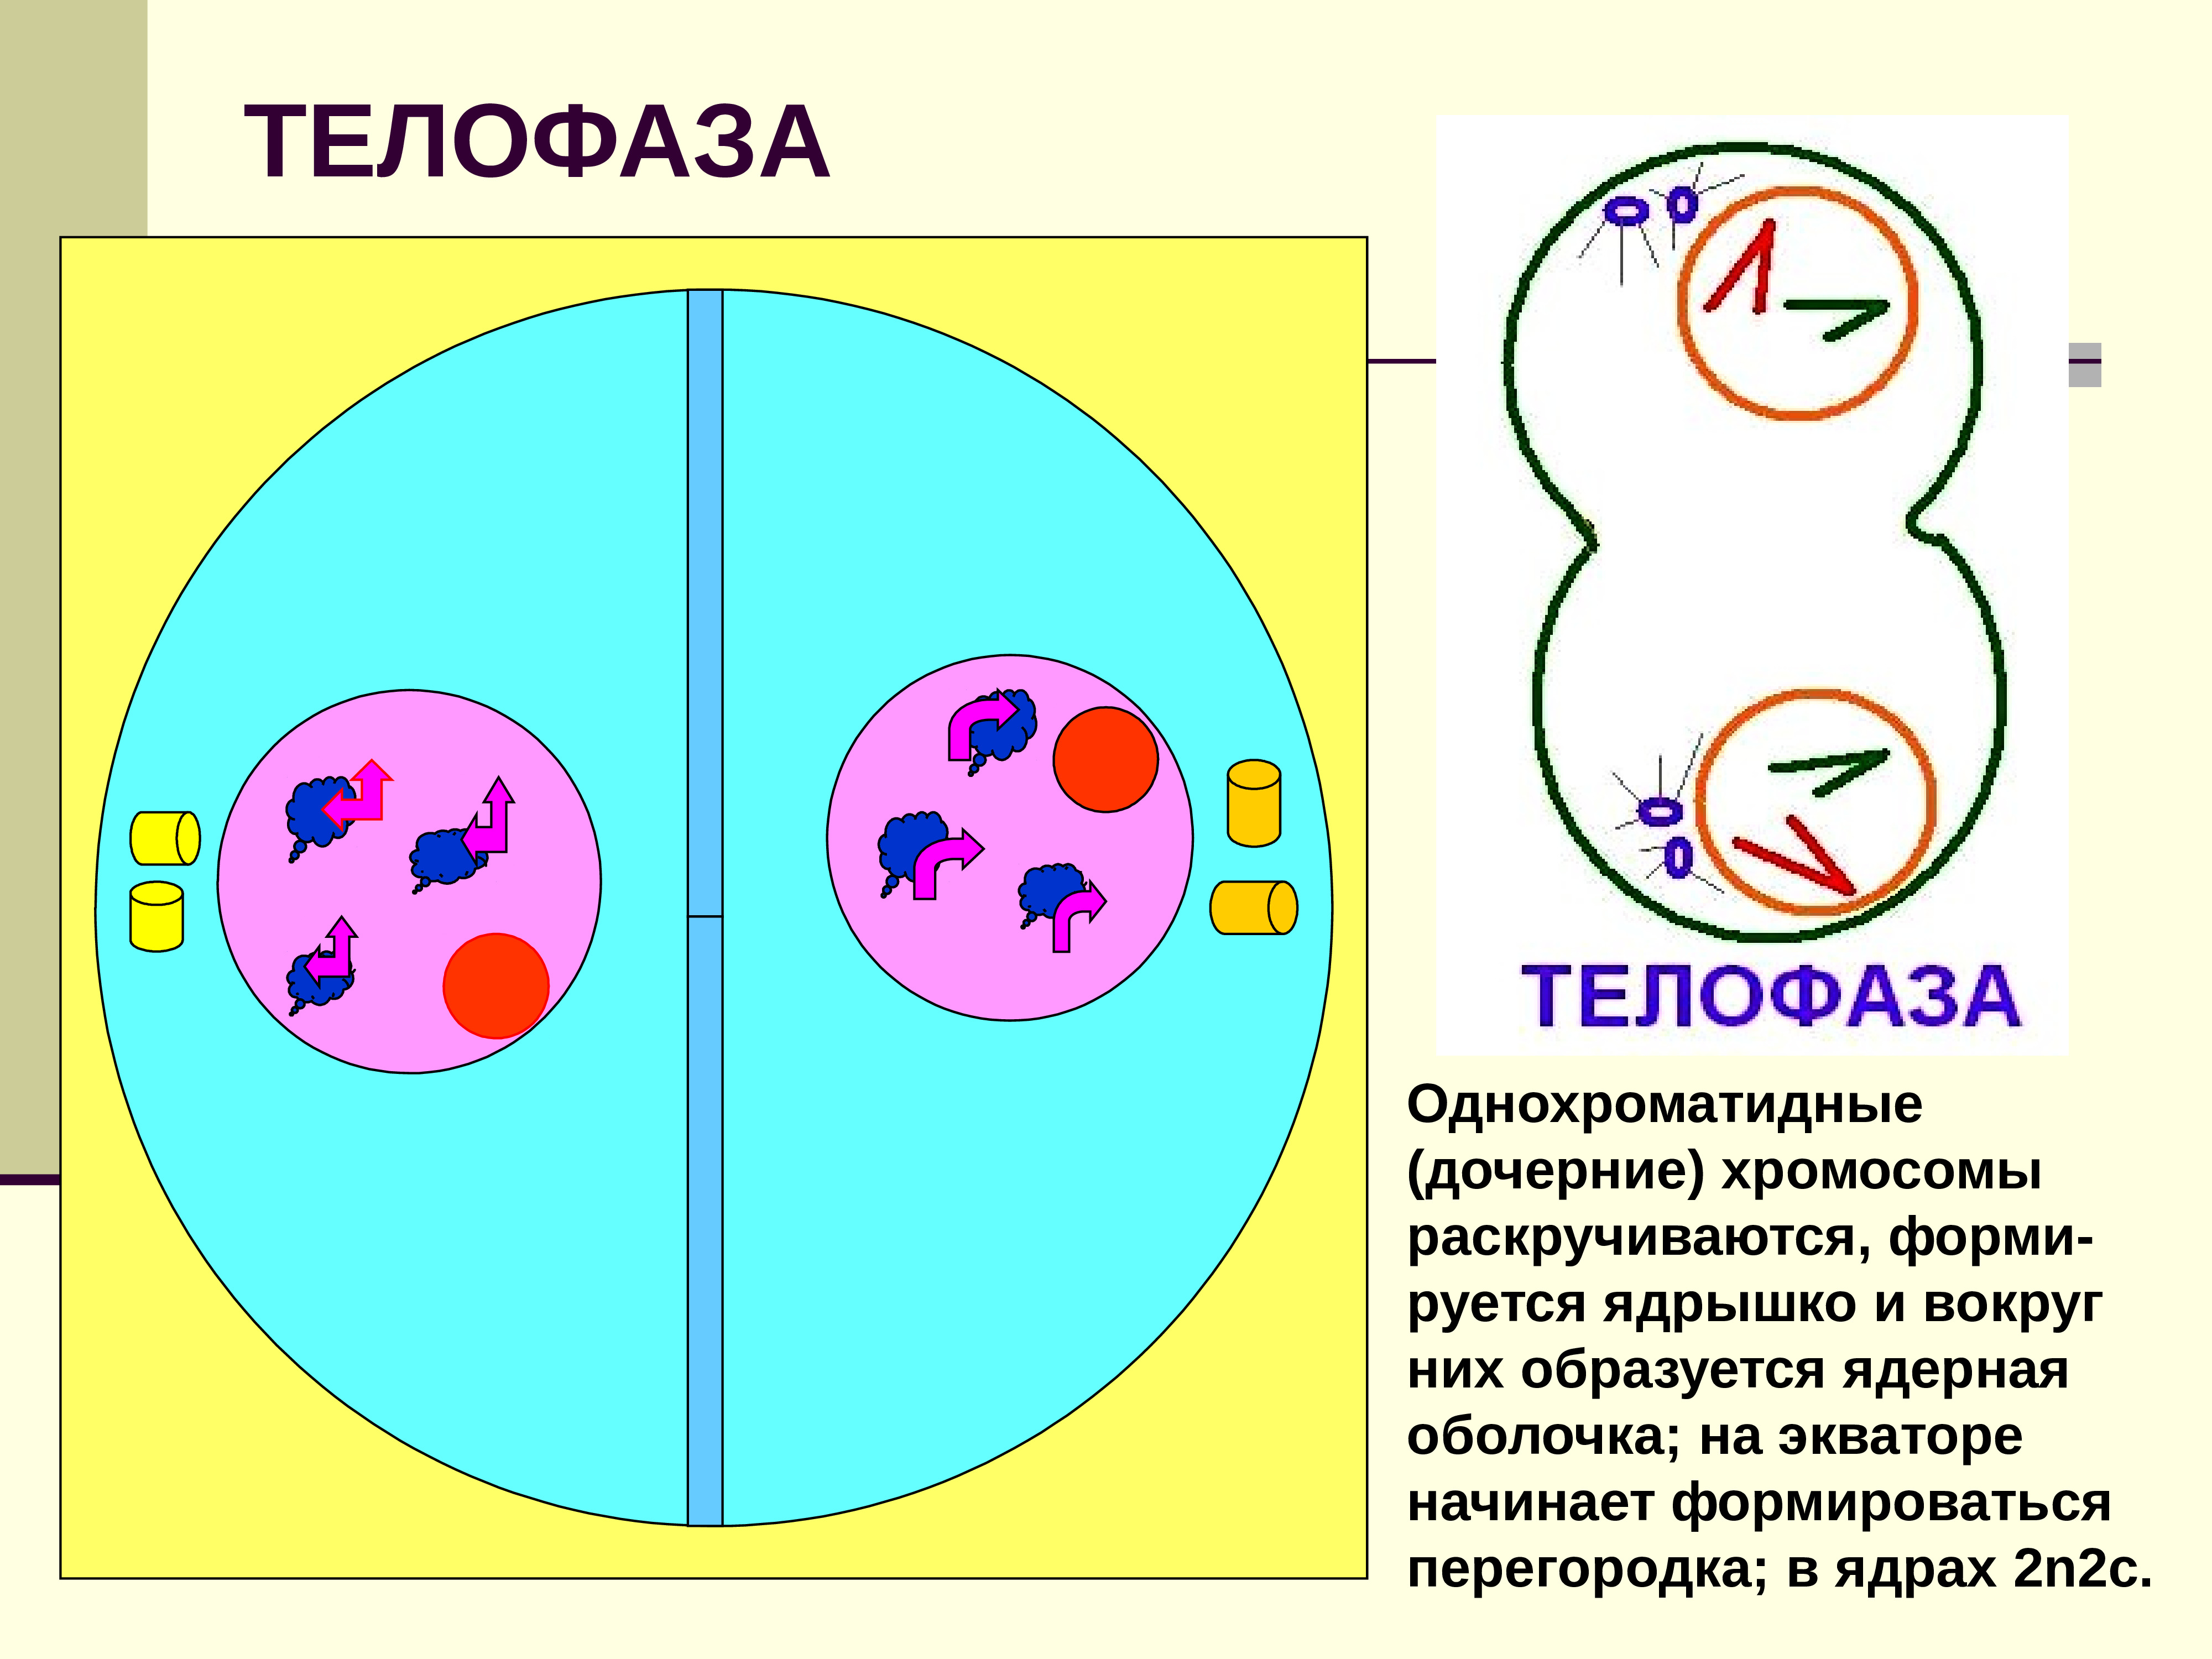 Ядра дочерних клеток в телофазе